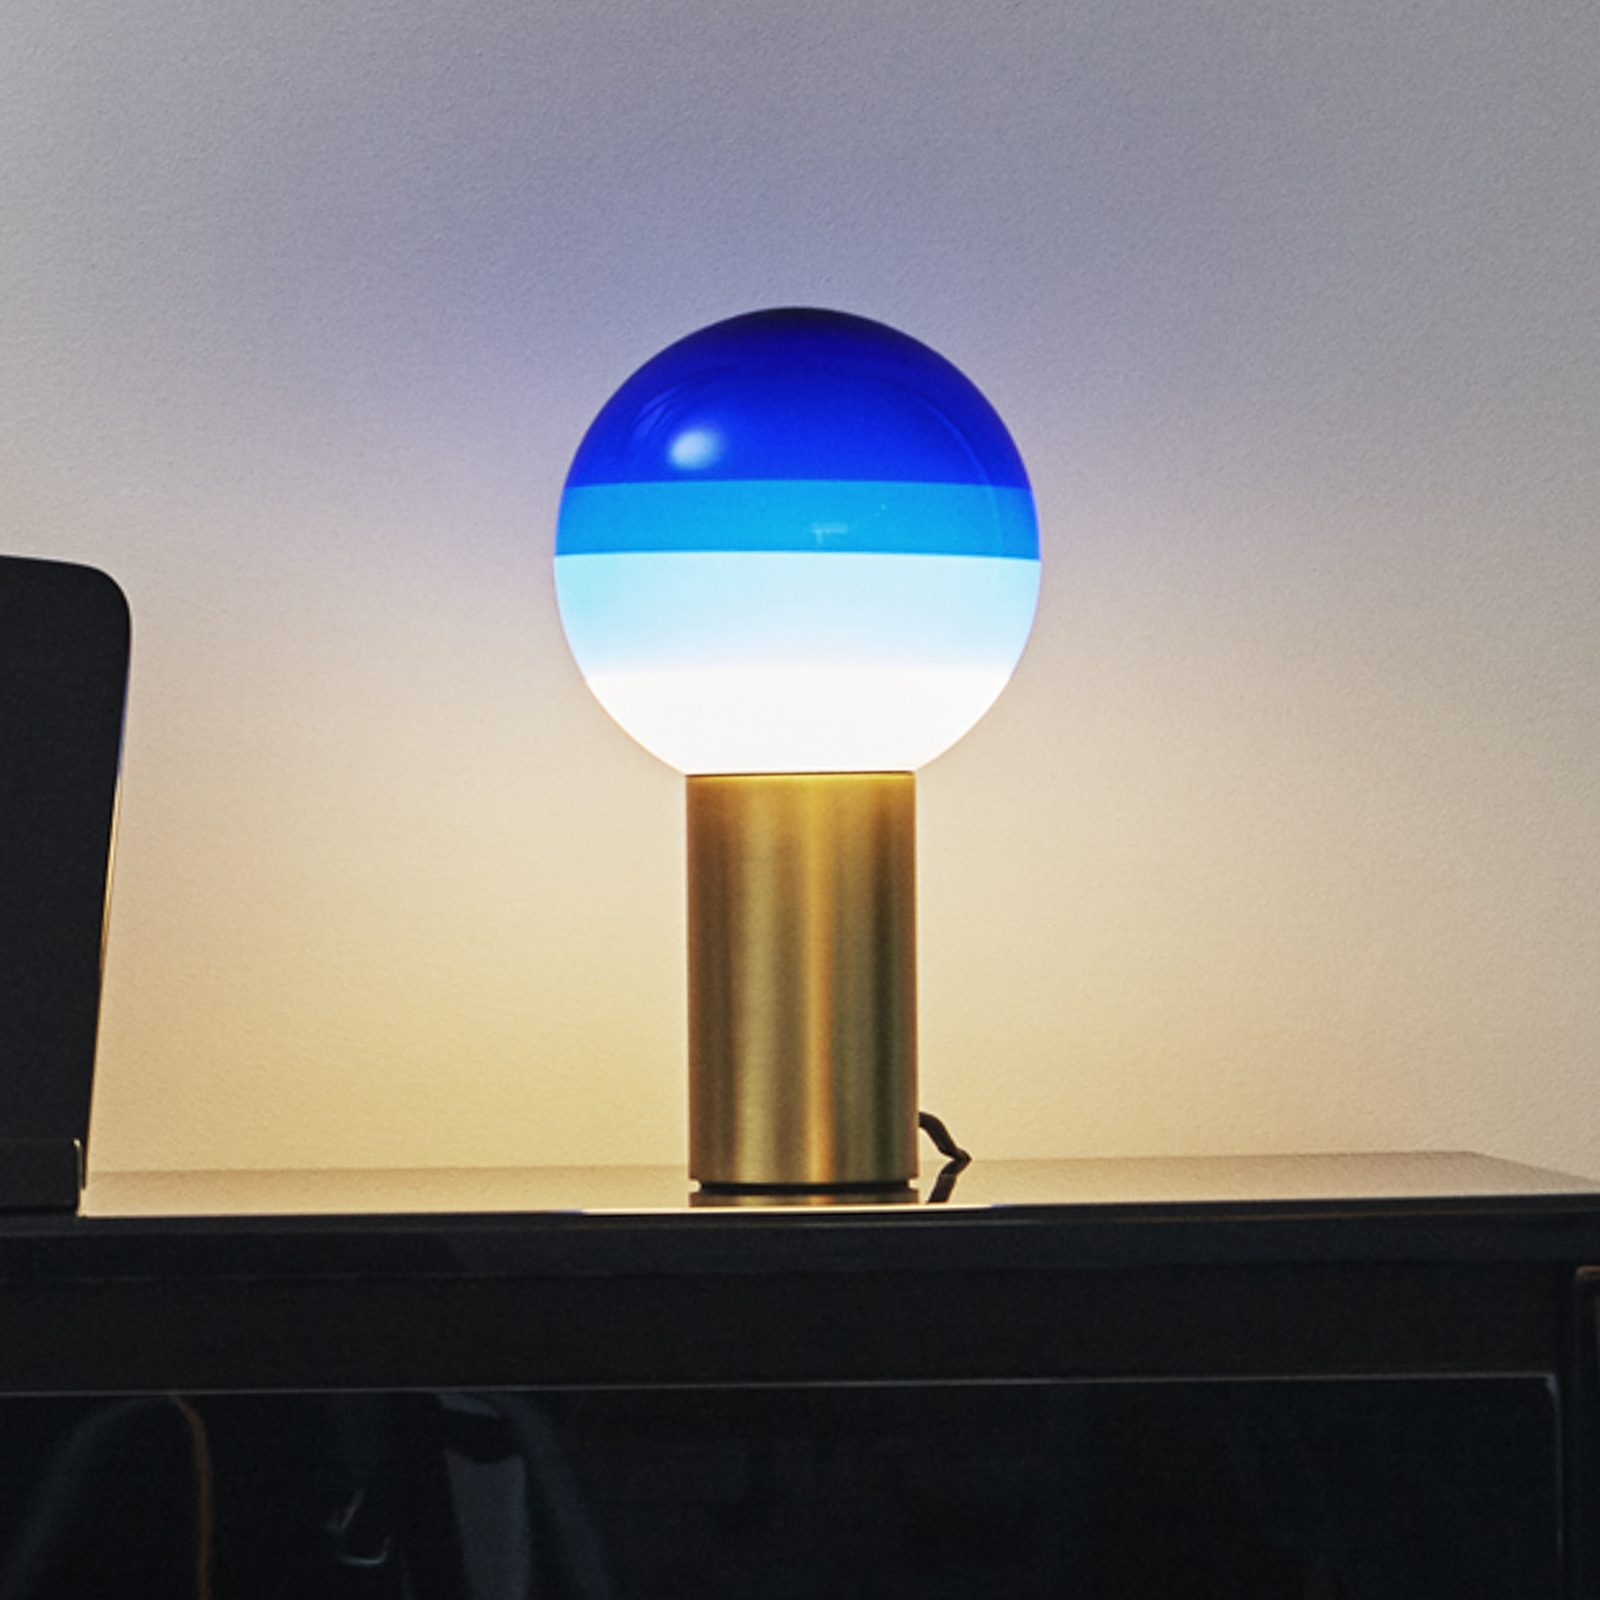 MARSET Dipping Light asztali lámpa kék/brass